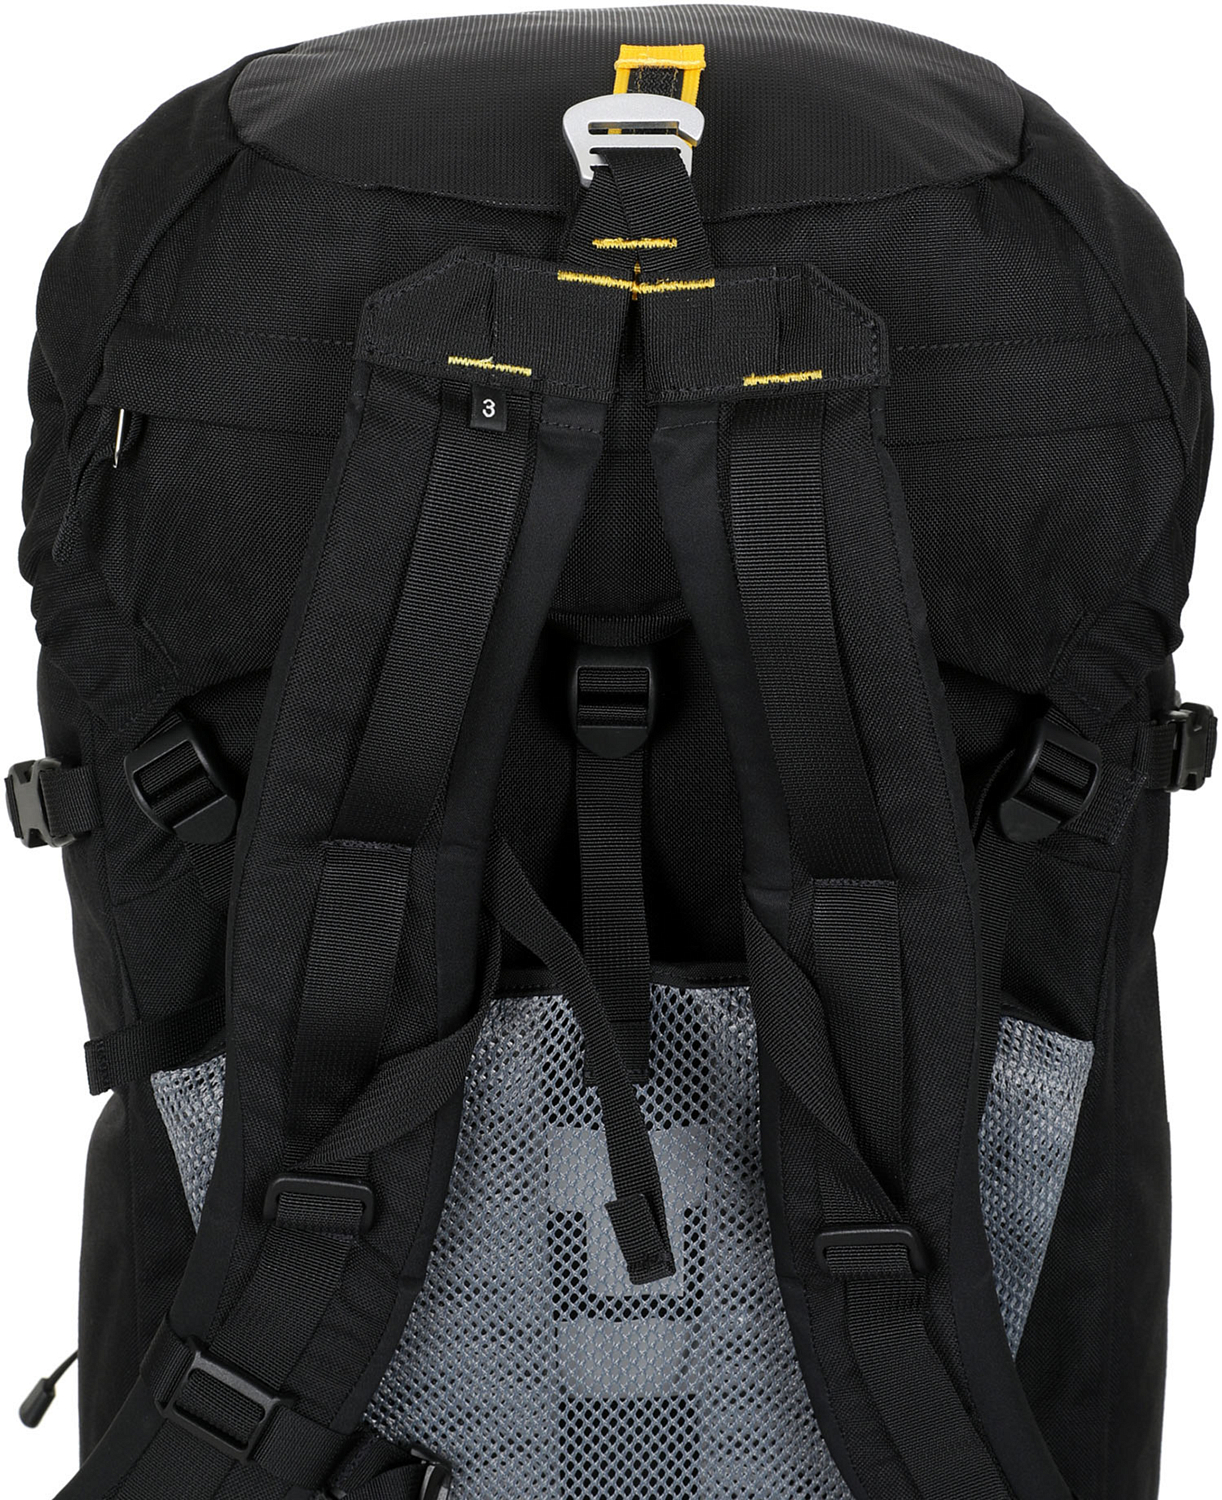 Рюкзак BACH Pack Specialist 75 (xlong) Black